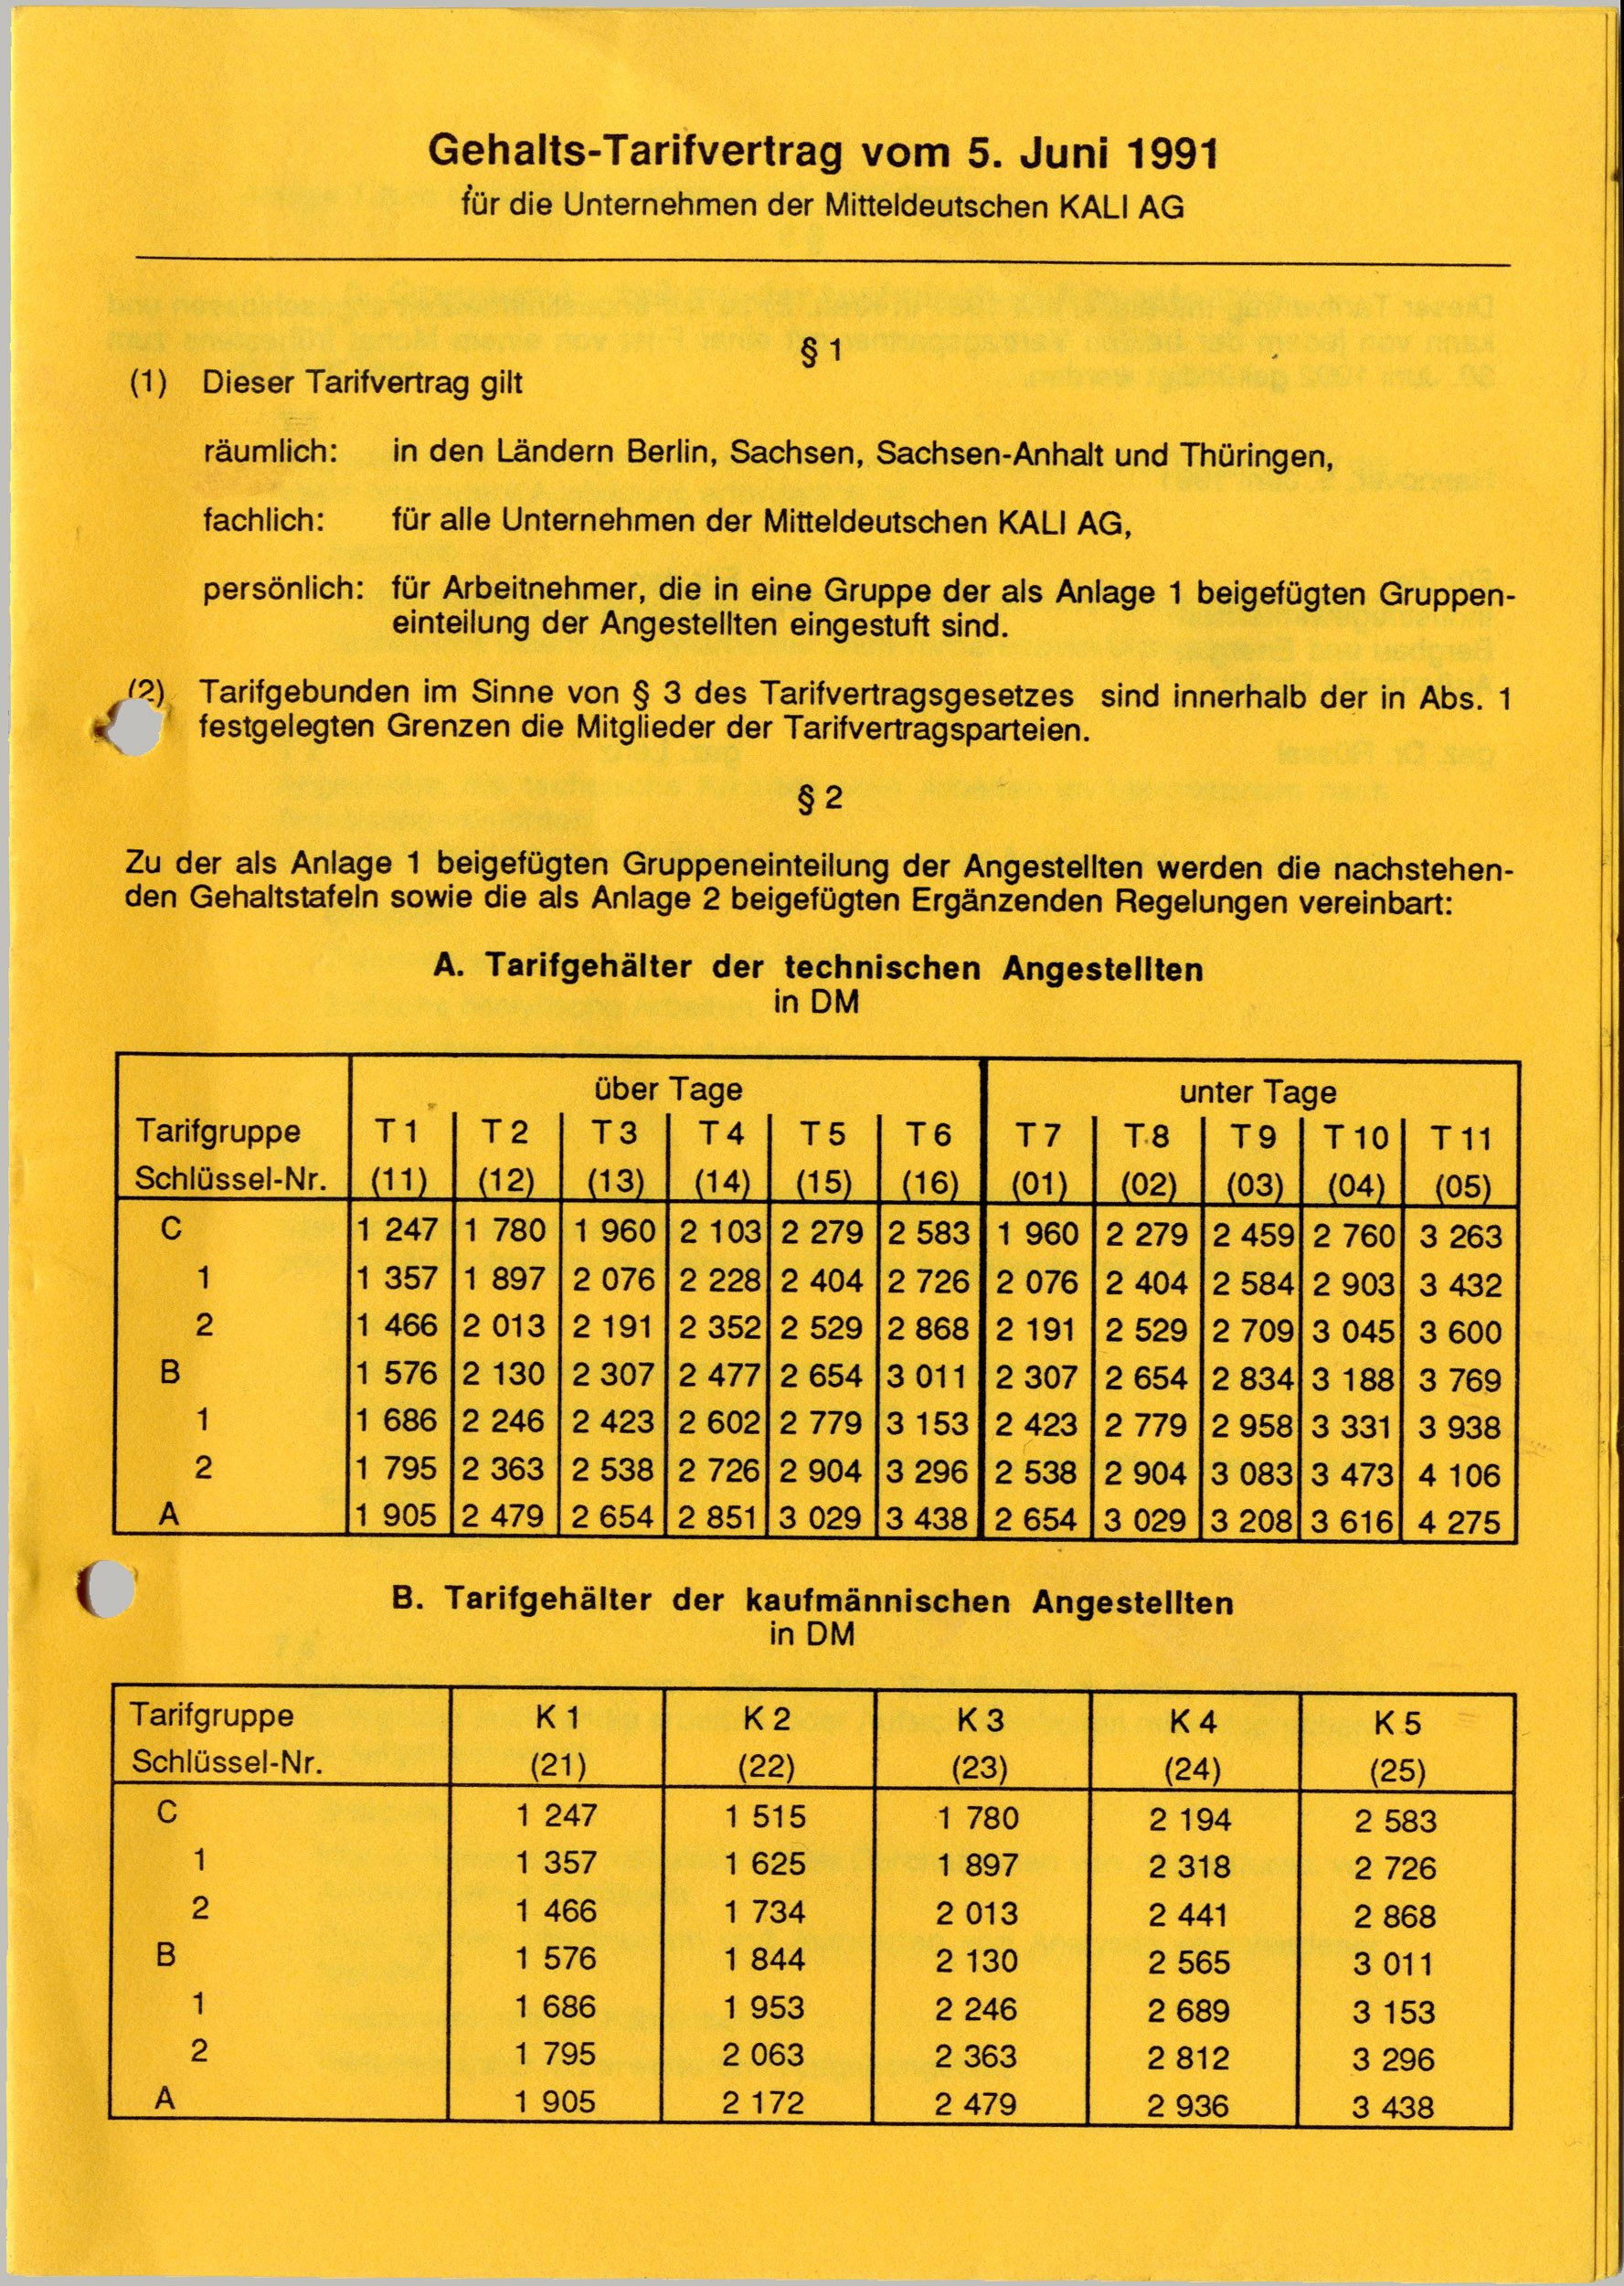 Gehalts-Tarifvertrag vom 5. Juni 1991 (Werra-Kalibergbau-Museum, Heringen/W. CC BY-NC-SA)